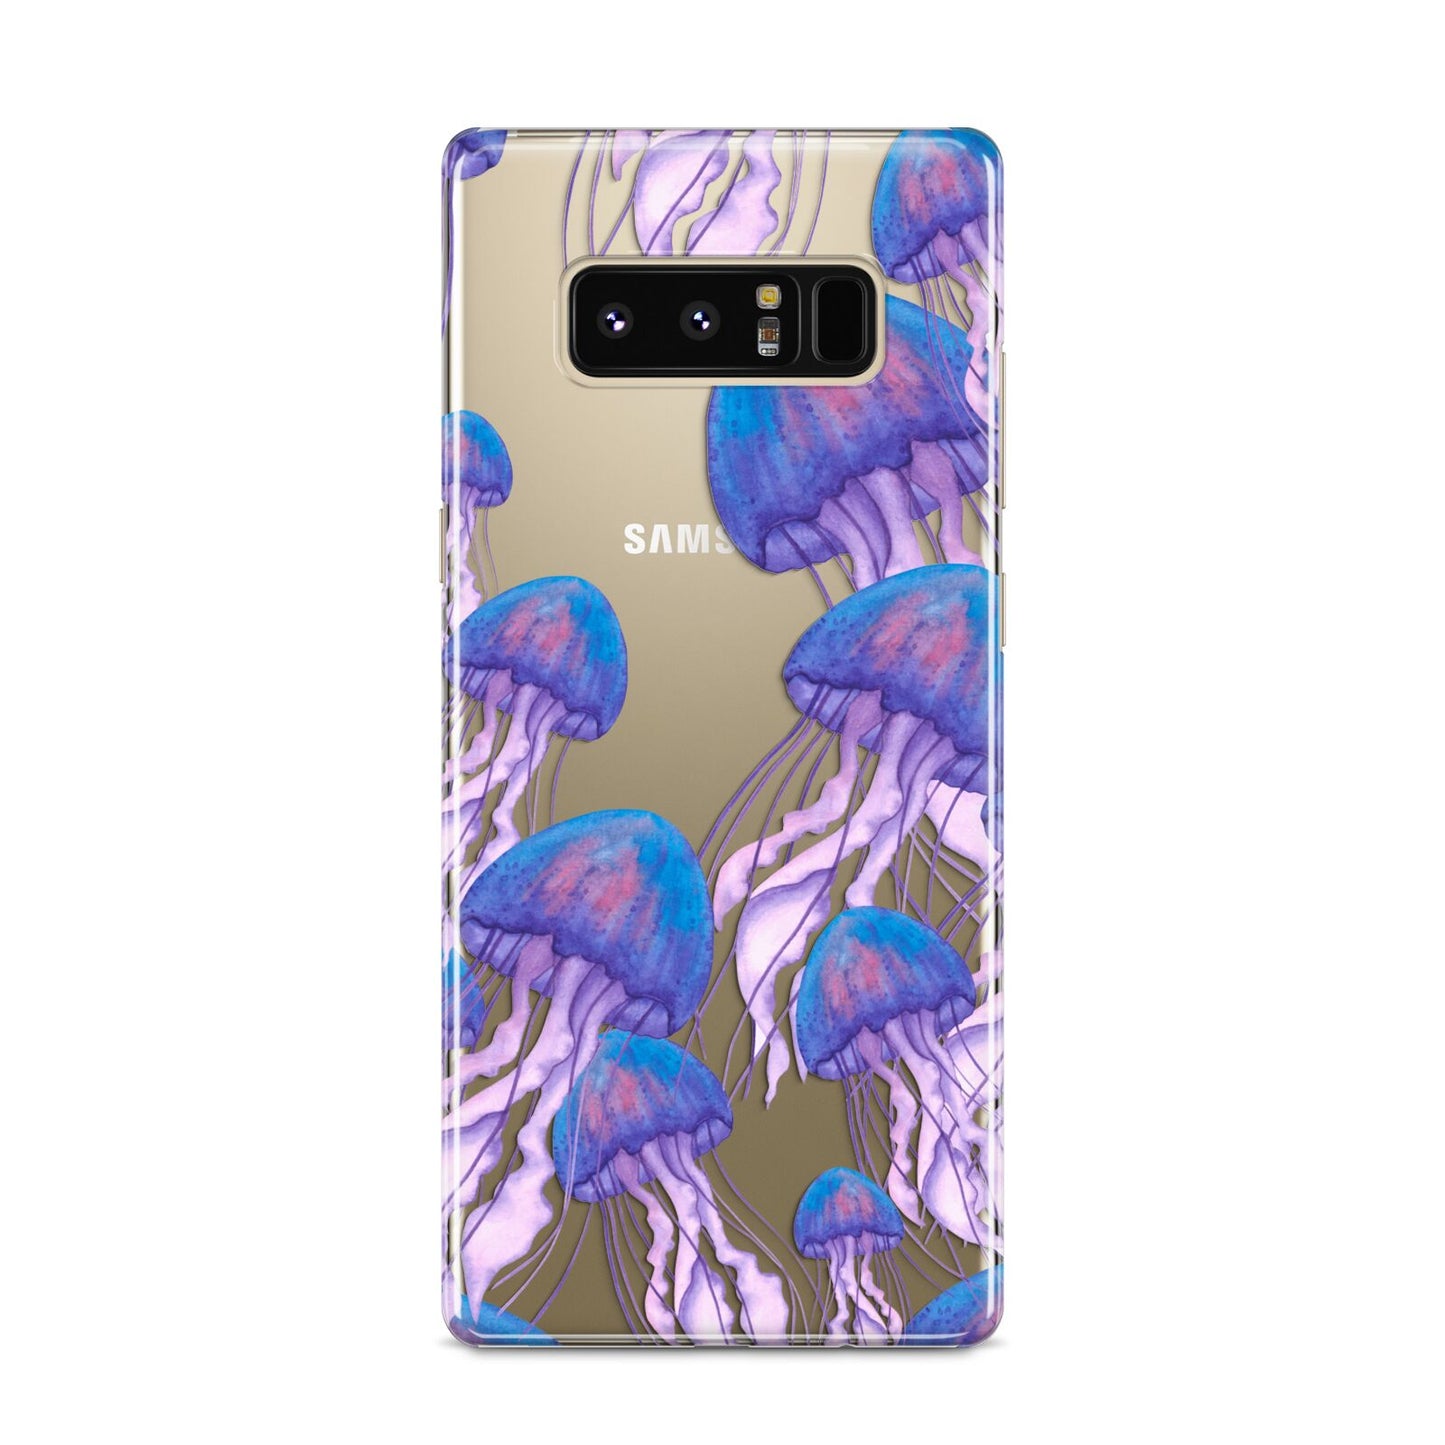 Jellyfish Samsung Galaxy S8 Case